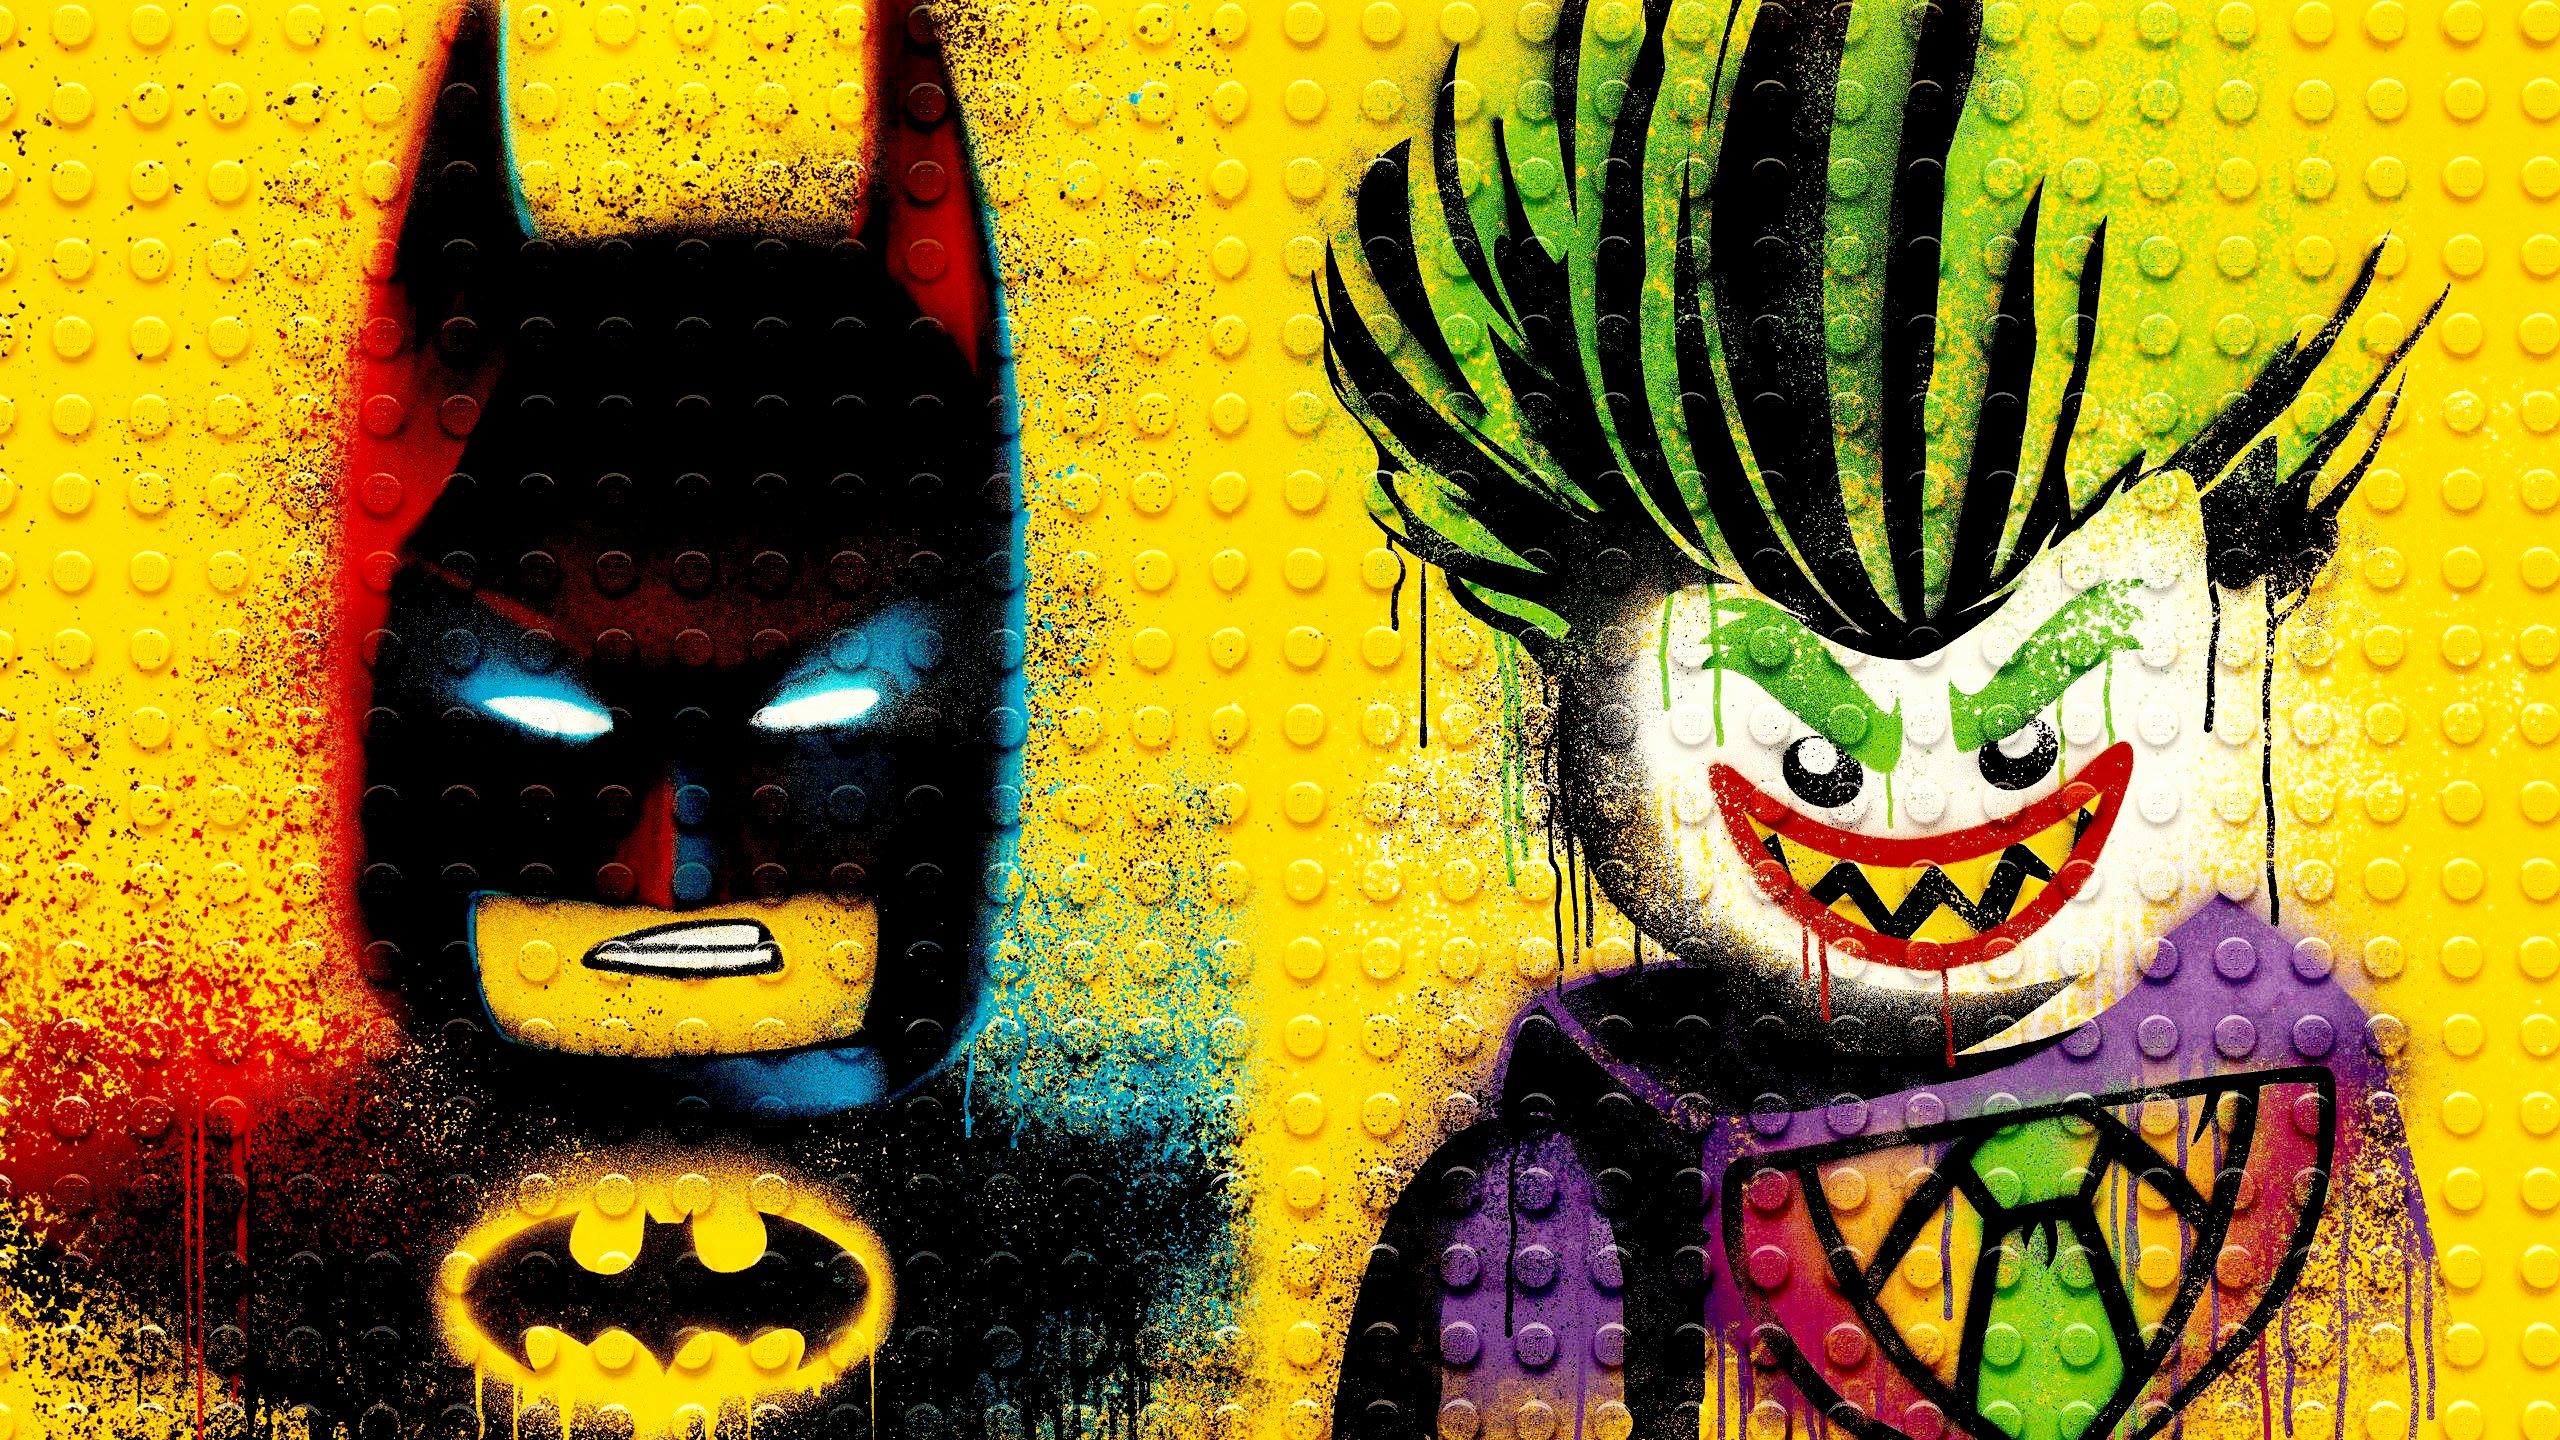 Lego Wallpaper Inspirational the Lego Batman and Jokar Wallpaper